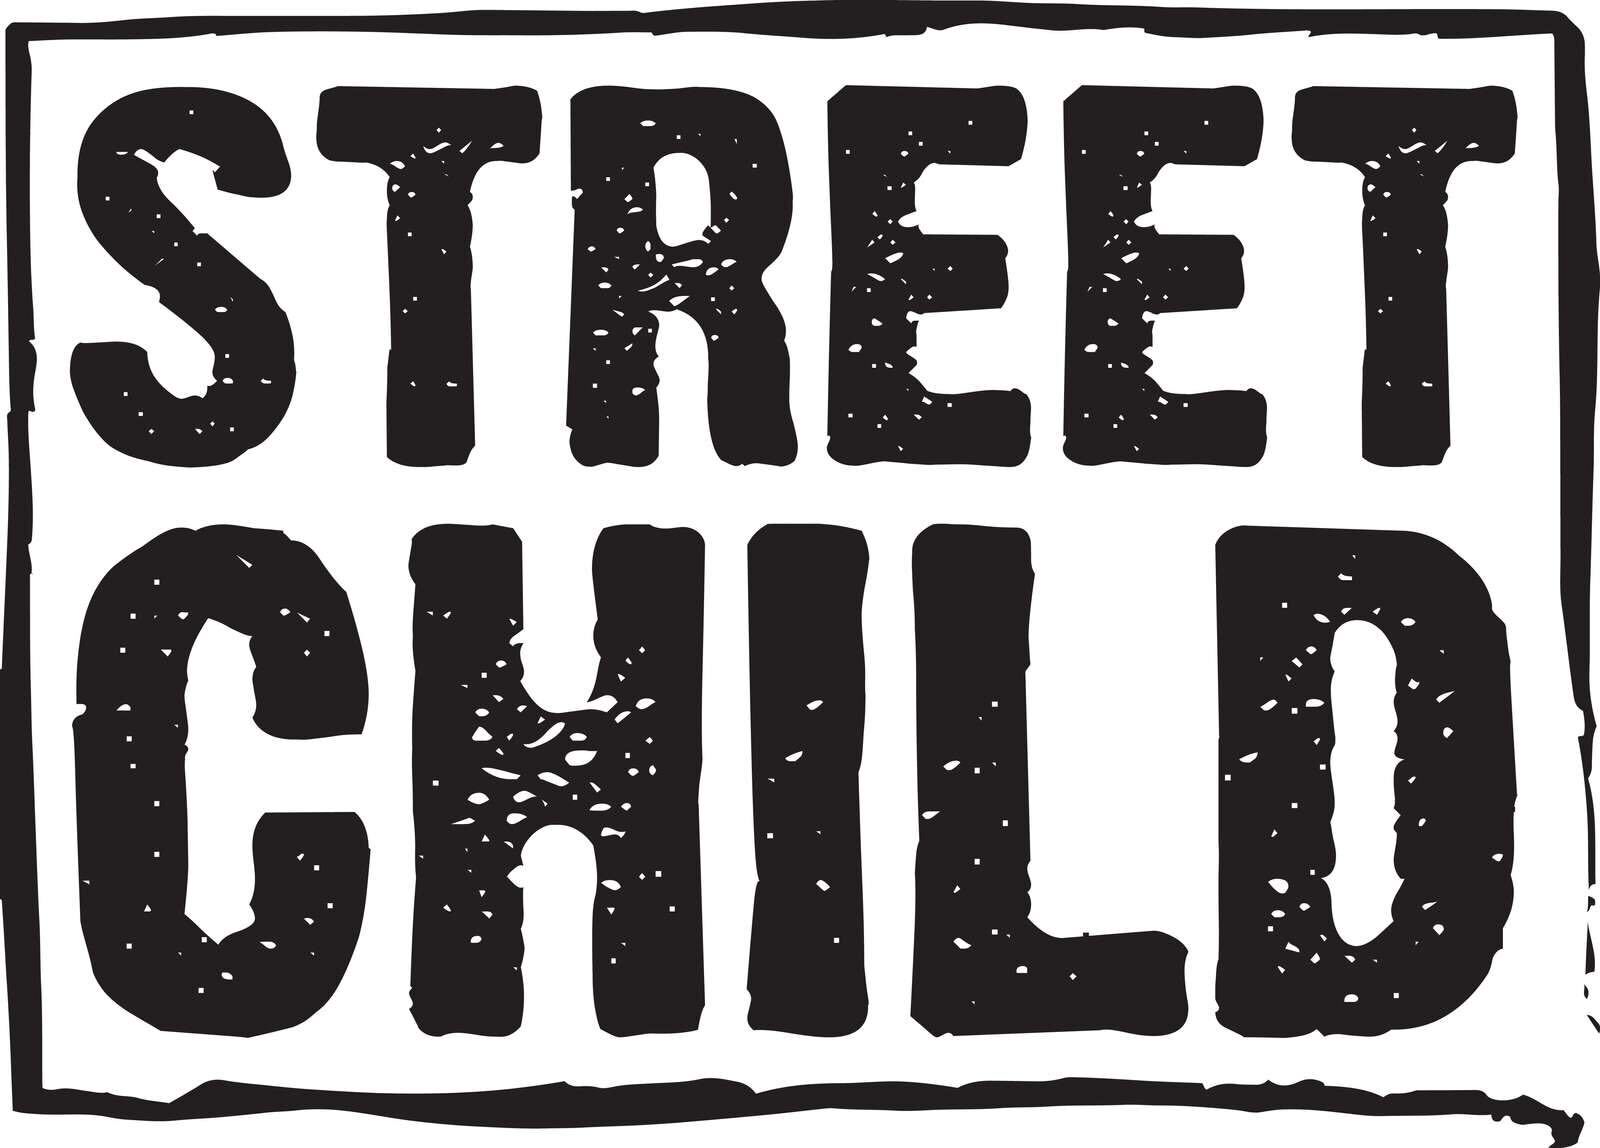 Street Child